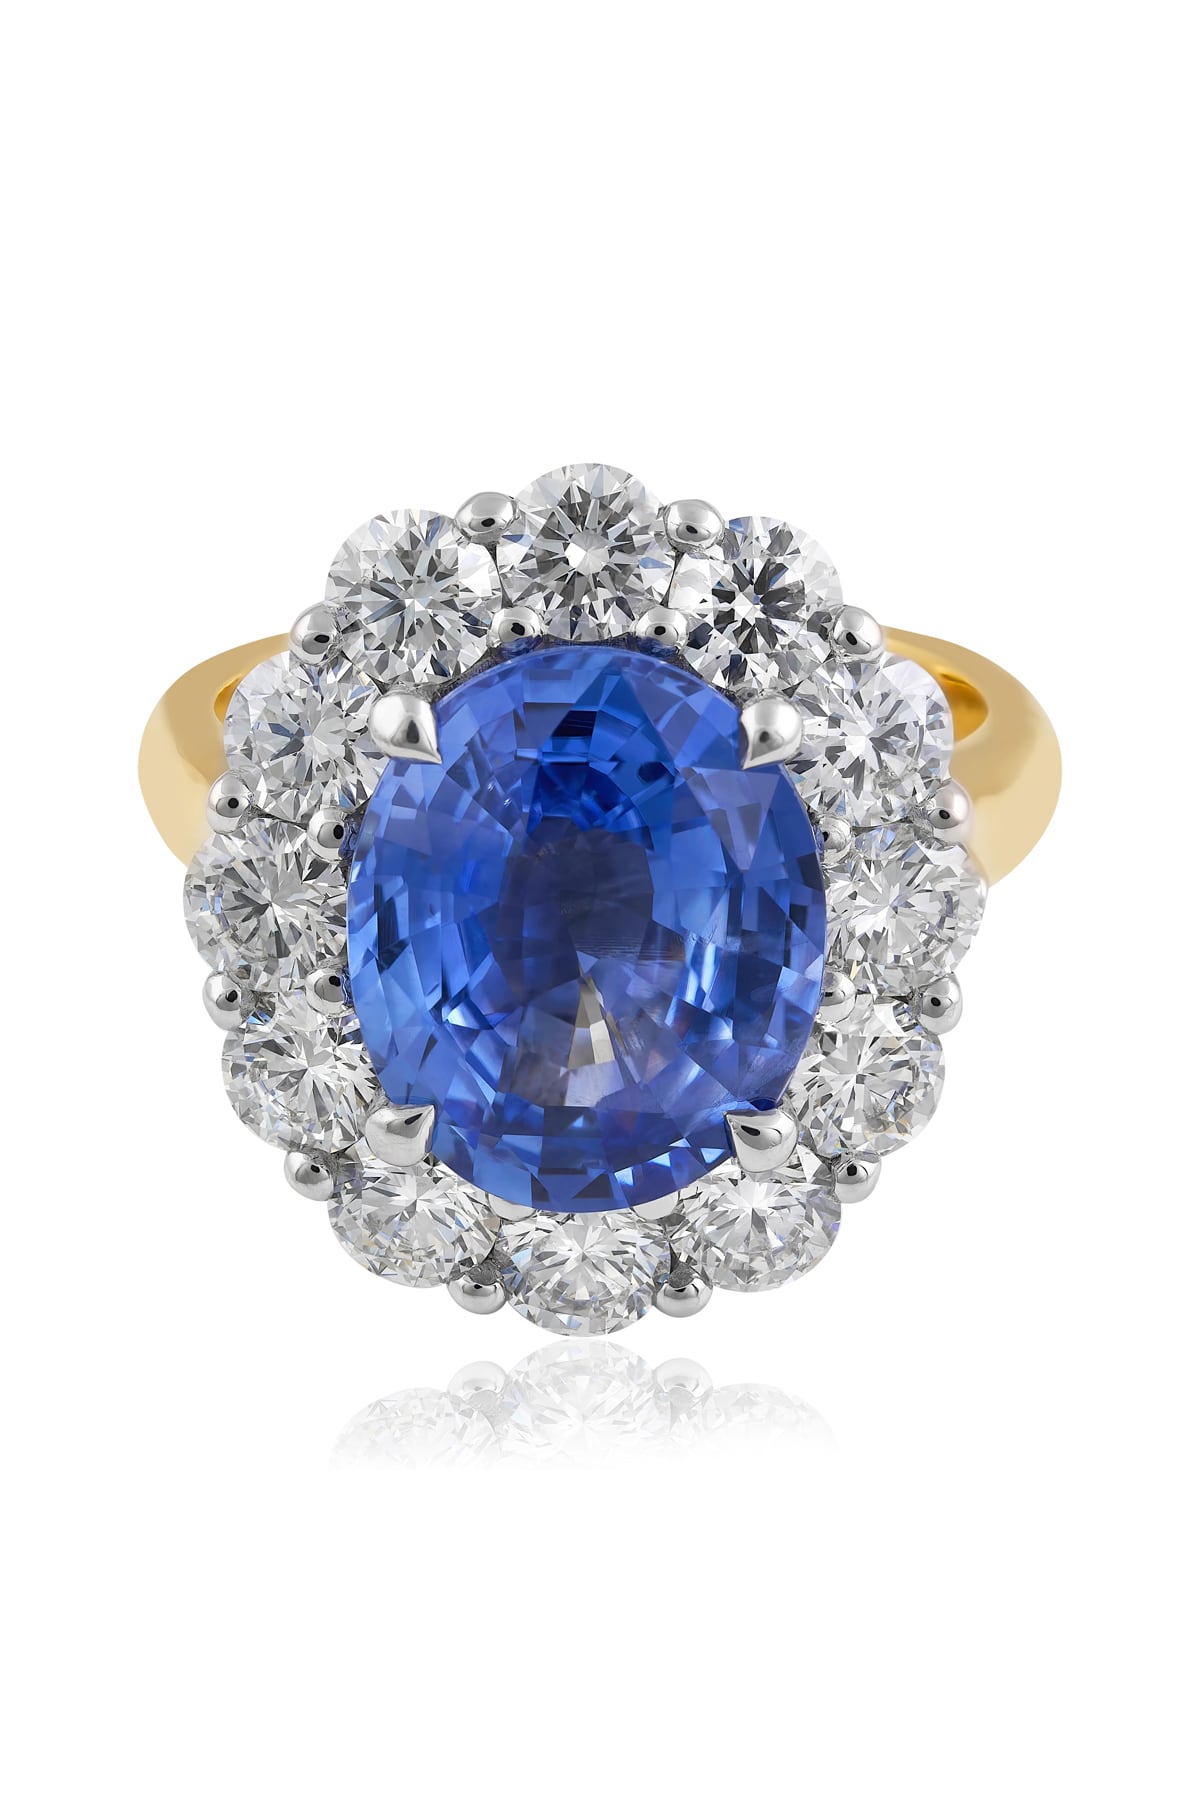 6.38 Carat Natural Ceylon Sapphire And Diamond Ring from LeGassick Jewellery.